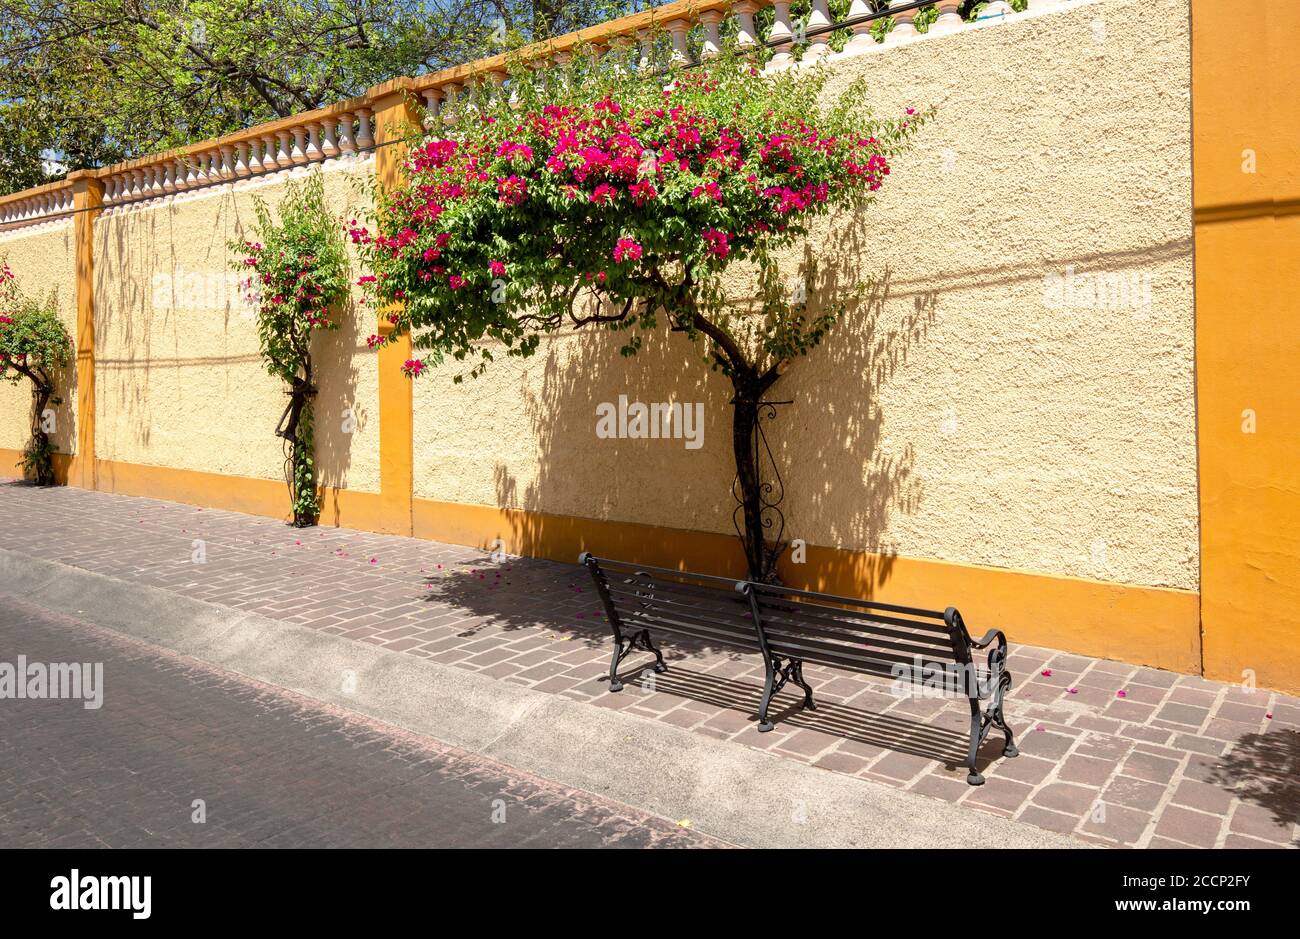 Guadalajara, Tlaquepaque scenic colorful streets during a peak tourist season Stock Photo